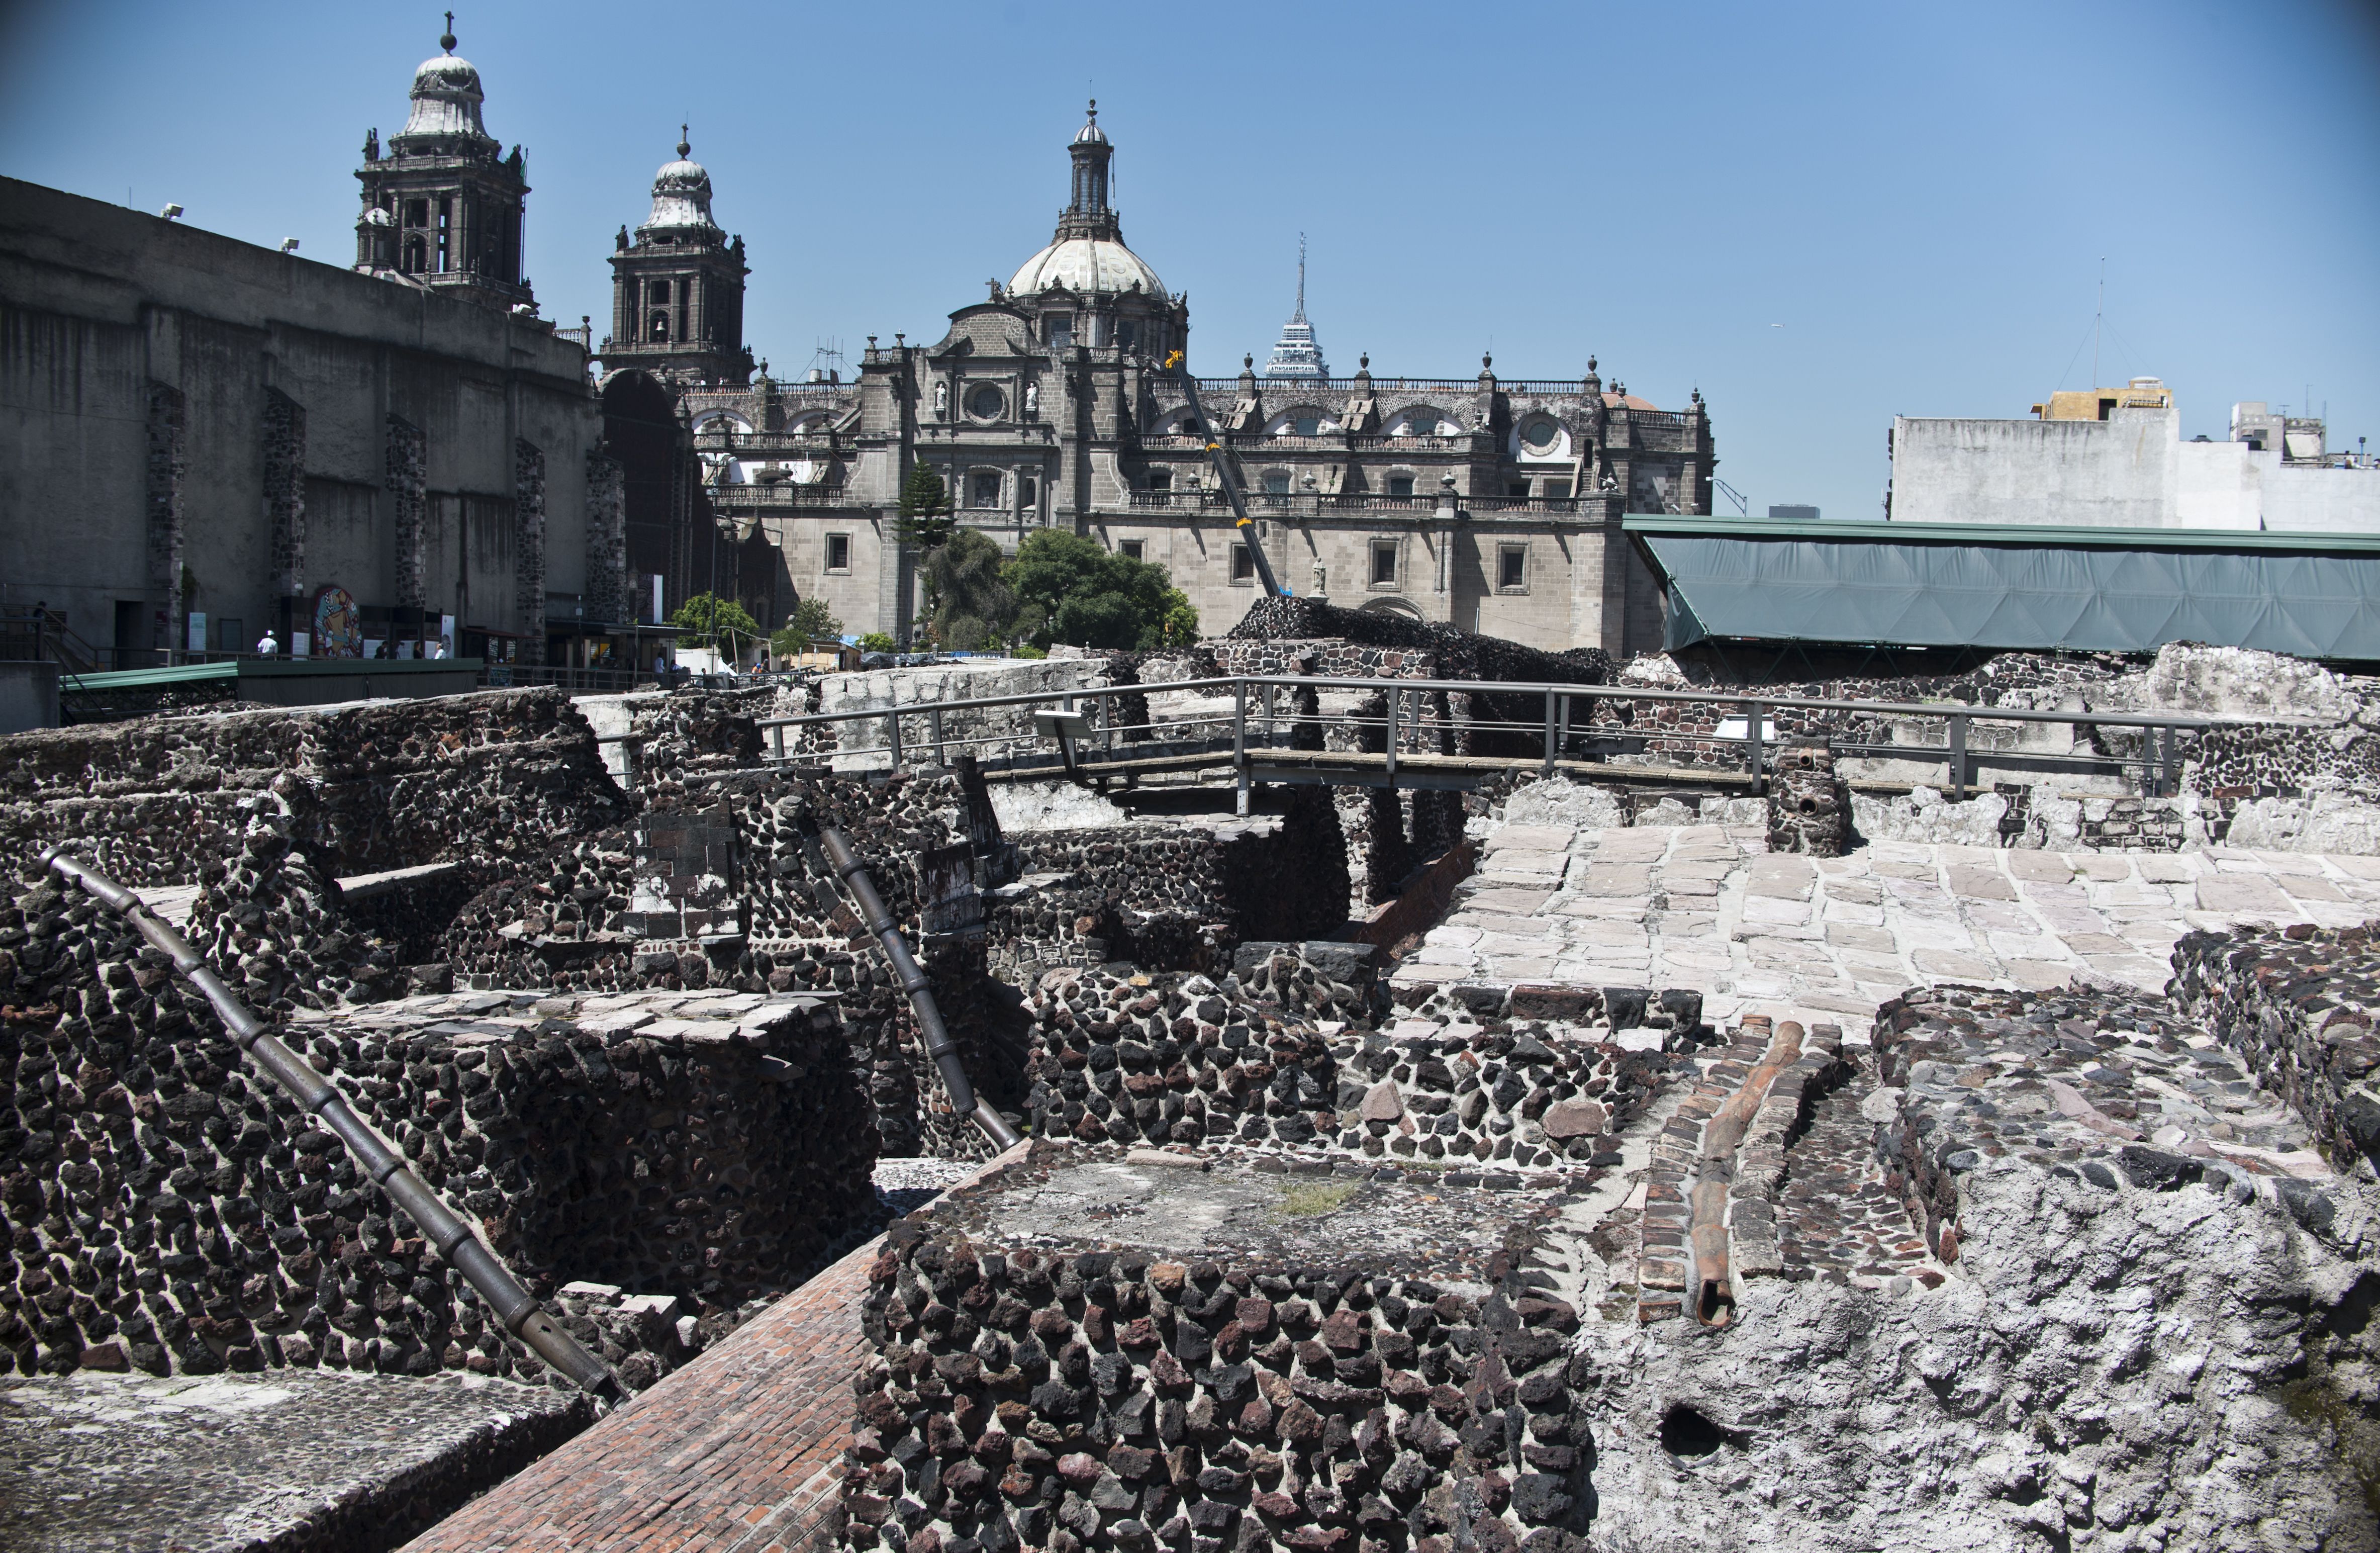 tenochtitlan mexico city